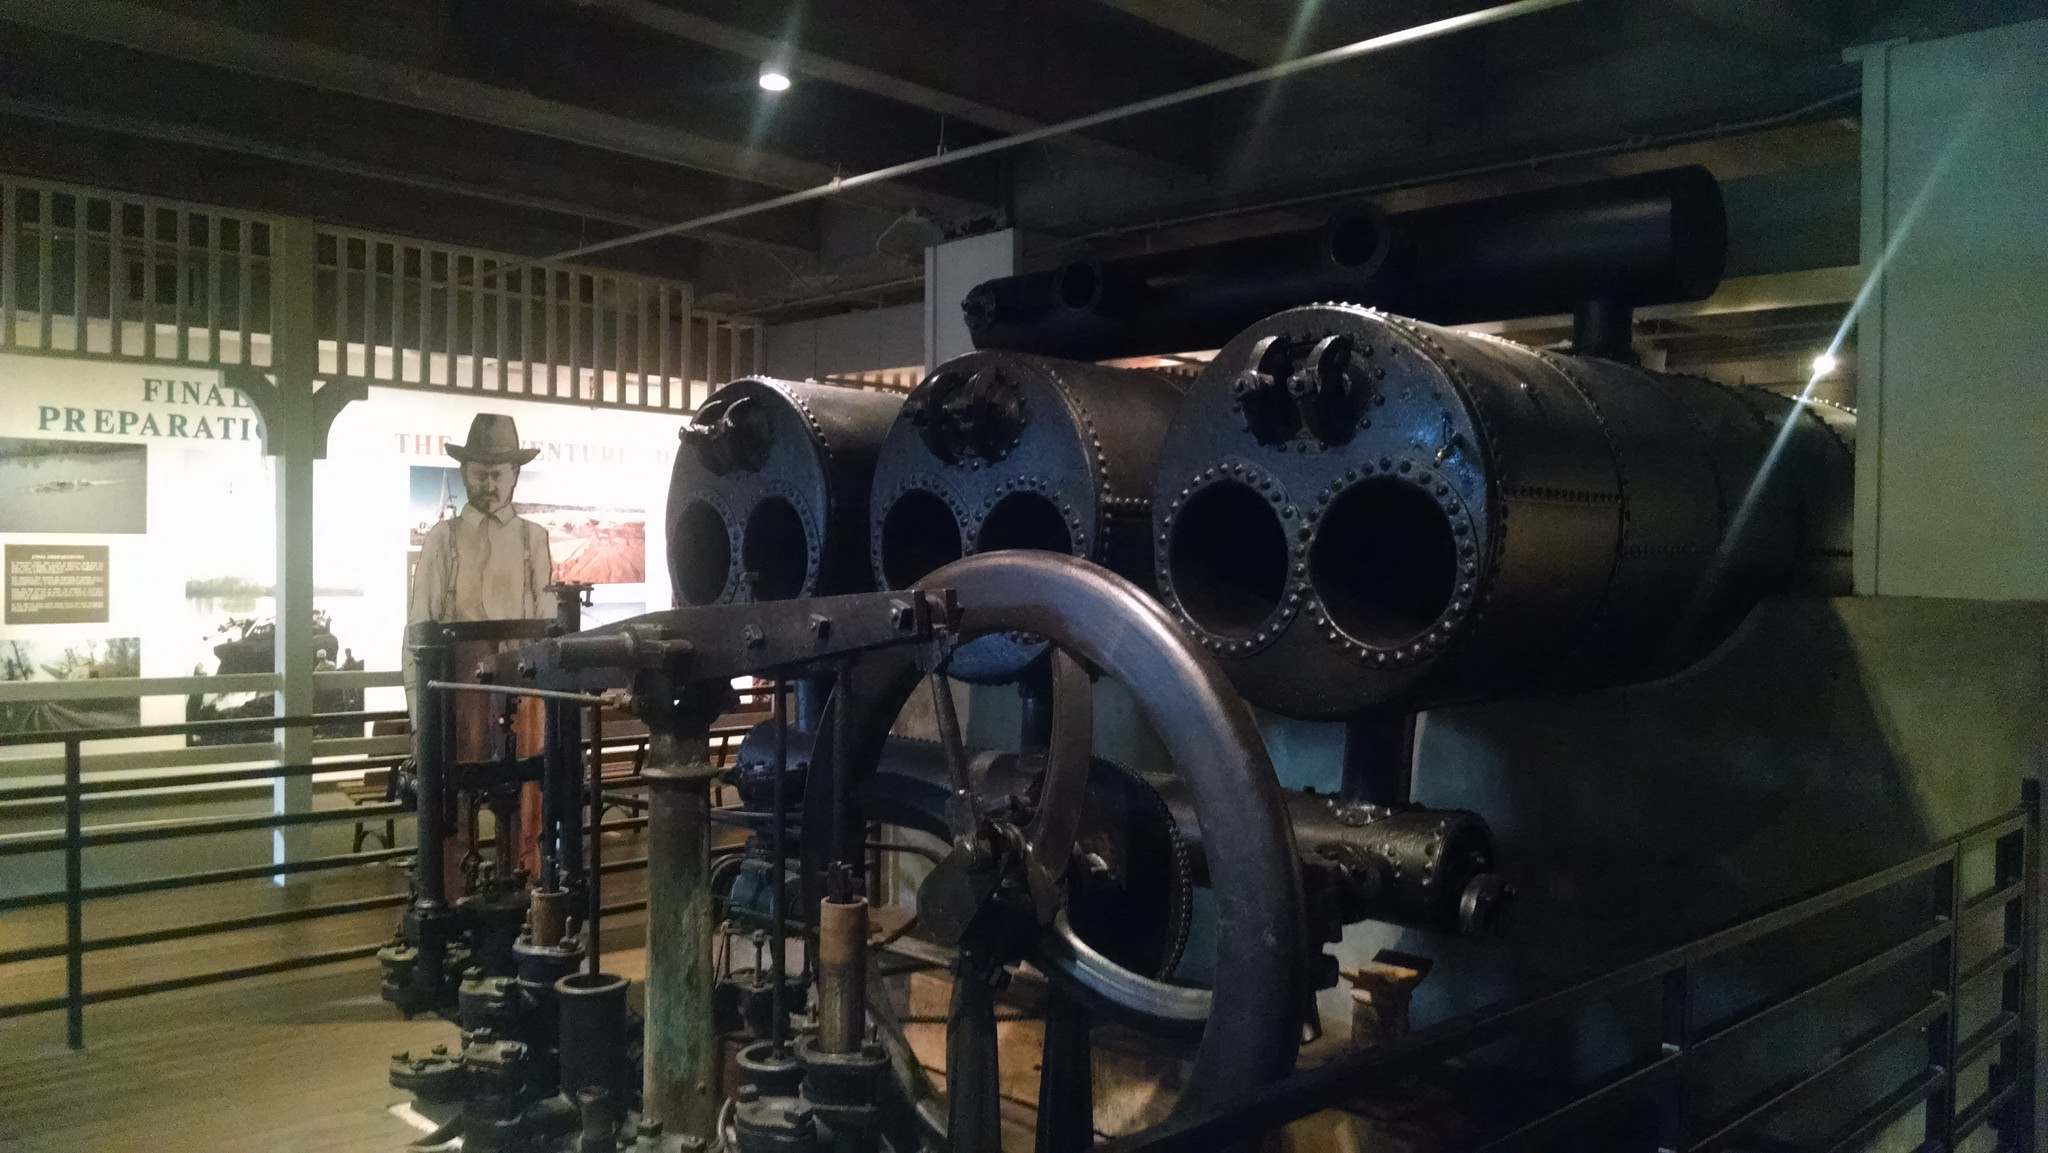 steamboat arabia8 History of Pioneering Midwest   Steamboat Arabia Museum in Kansas City